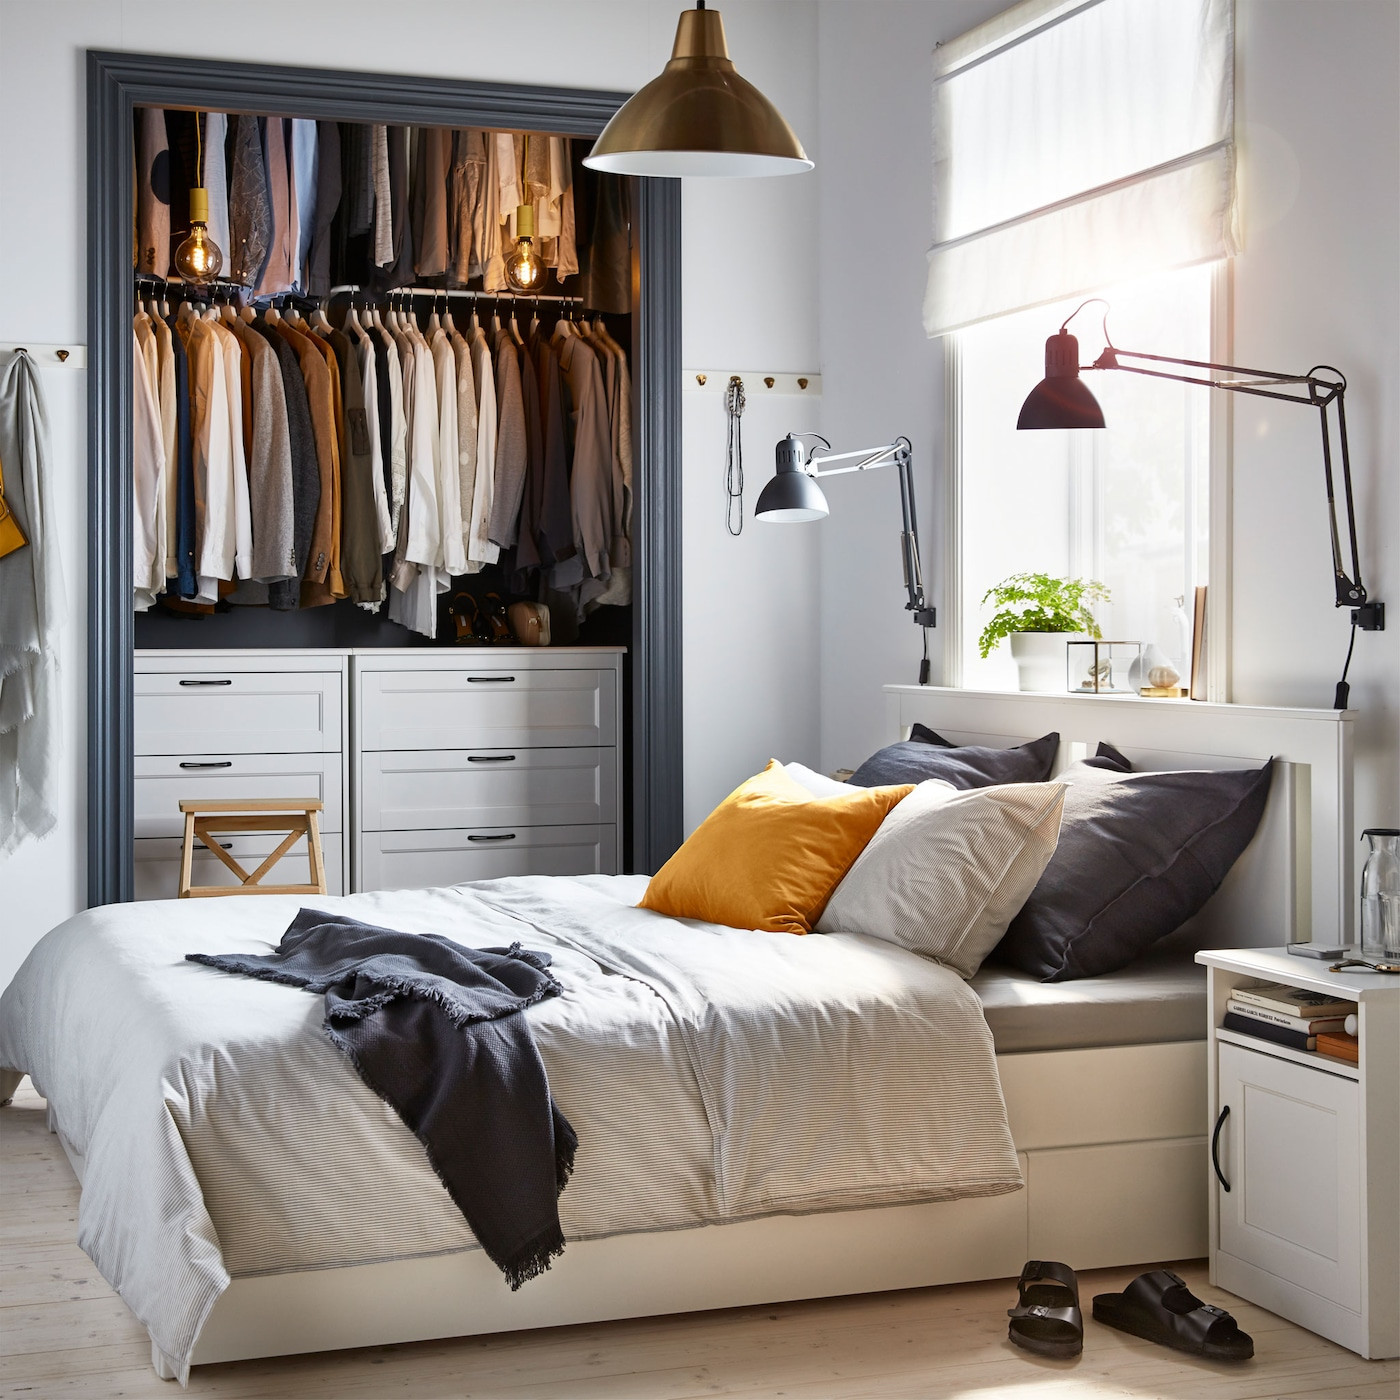 Ikea Bedroom Storage
 Tasteful stylish and storage friendly bedroom IKEA